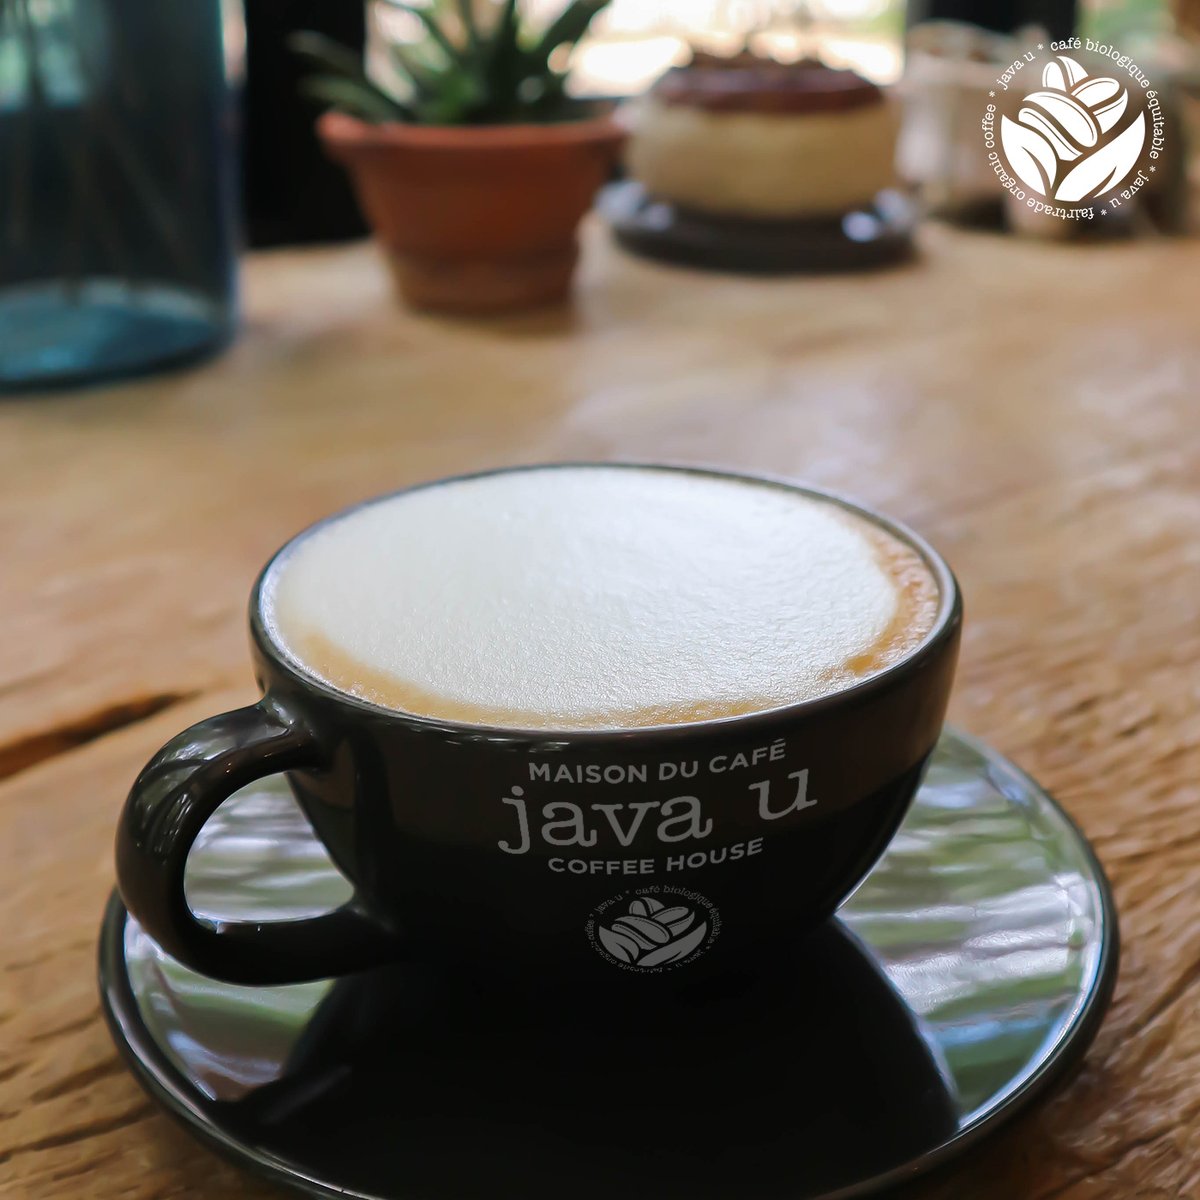 Happy Flat White Day! ☕

Joyeuse journée du café au lait! ☕

#javau #fairtradeorganic #montreal #coffee #cafe #mtlcafe #fresh #coffeelover #coffeeshop #coffeehouse #coffeevibes #food #foodie #instafood #instagood #instadaily #flatwhite